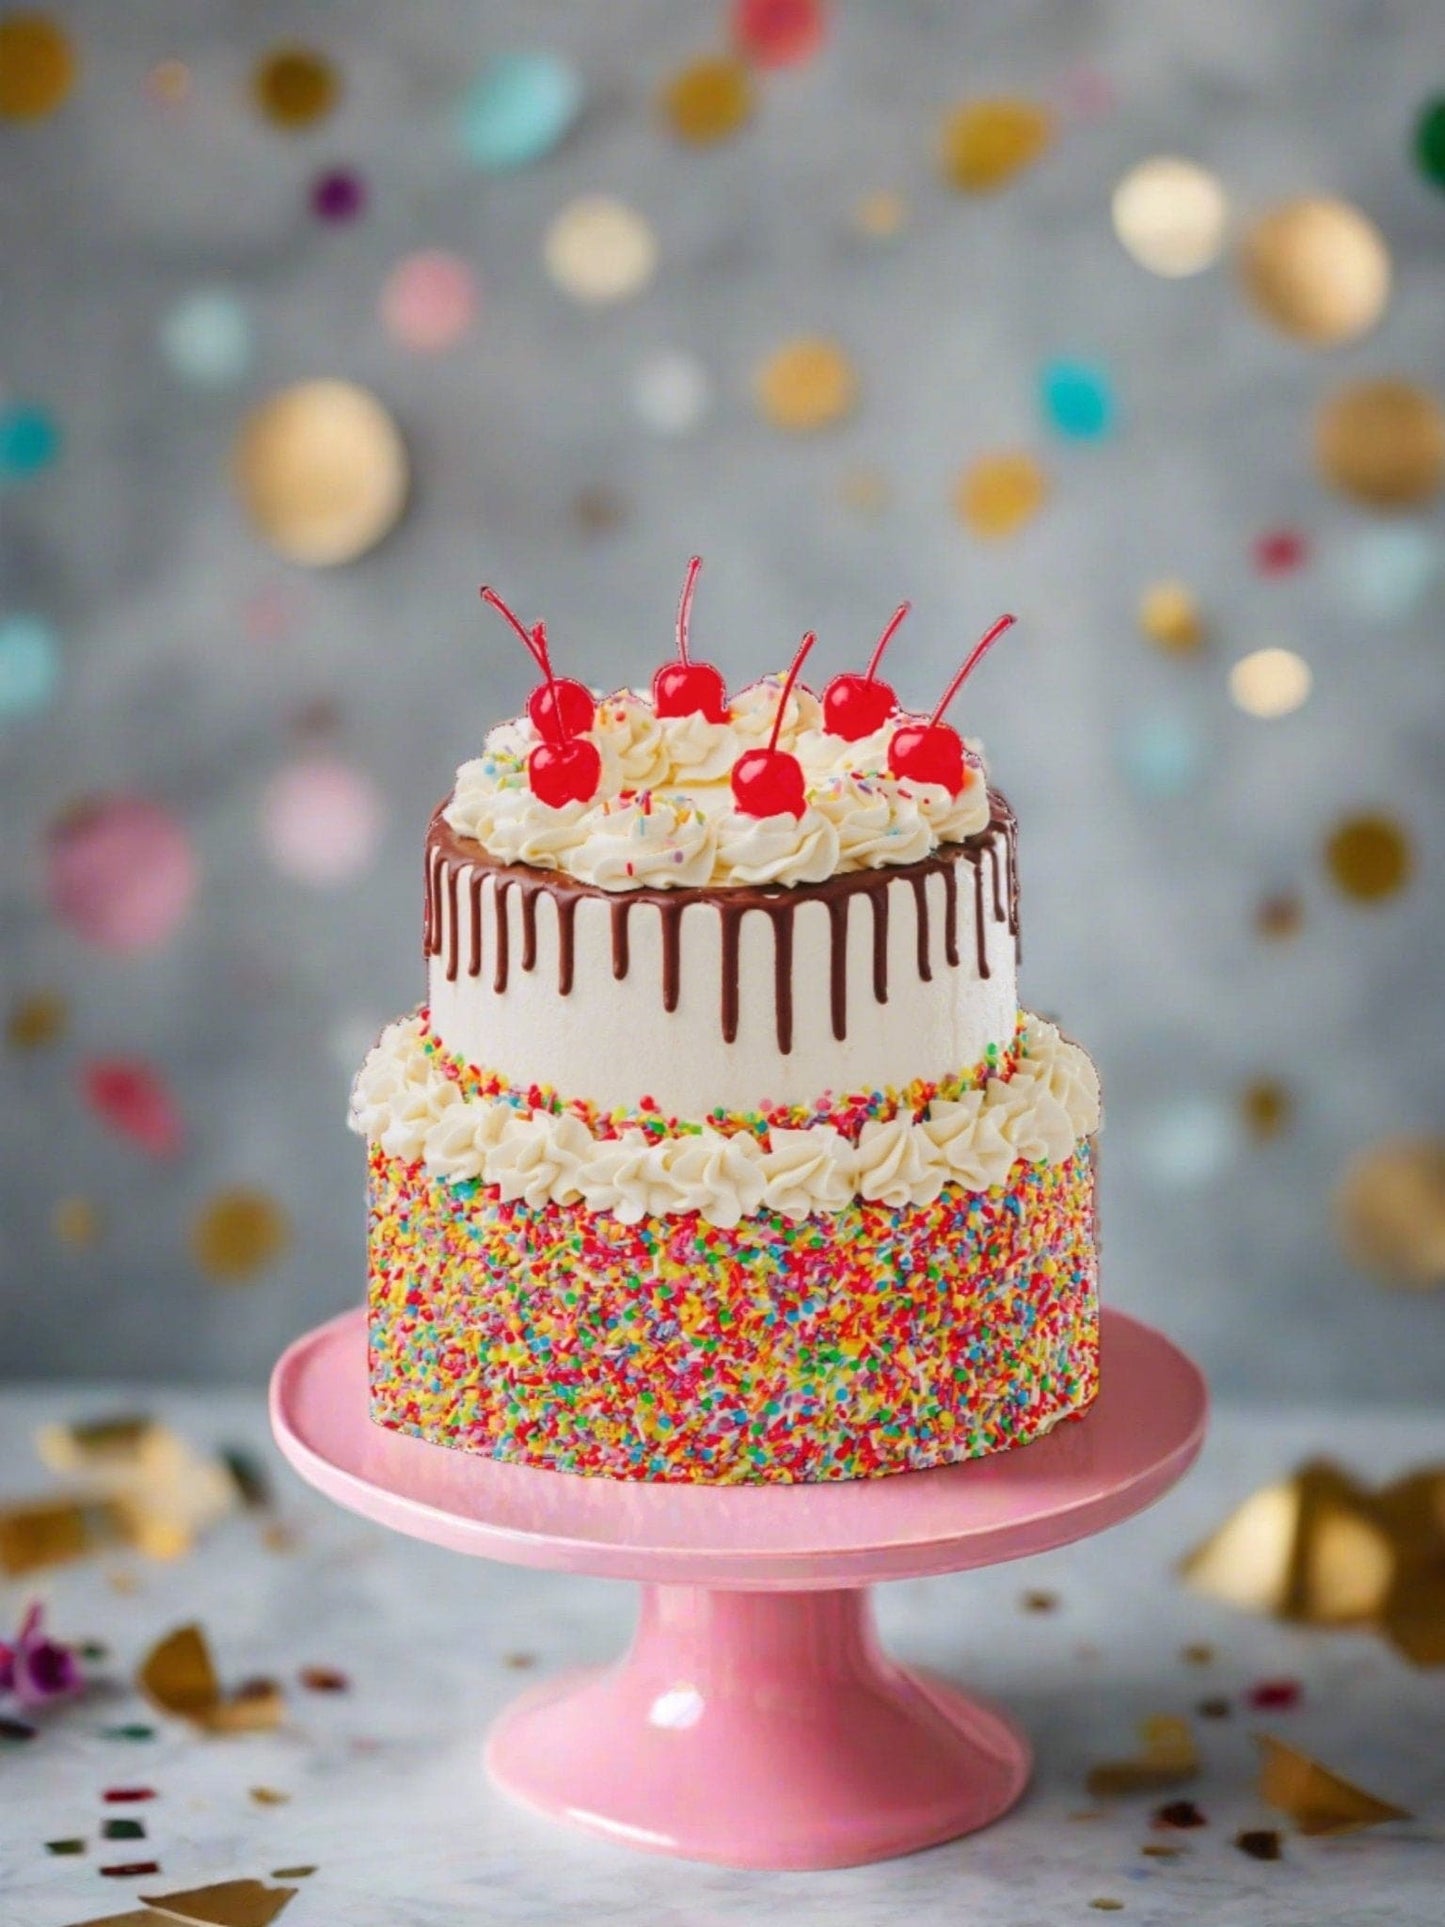 21st Birthday Cake Bundle - Ice Cream Sundae Cake - Patisserie Valerie